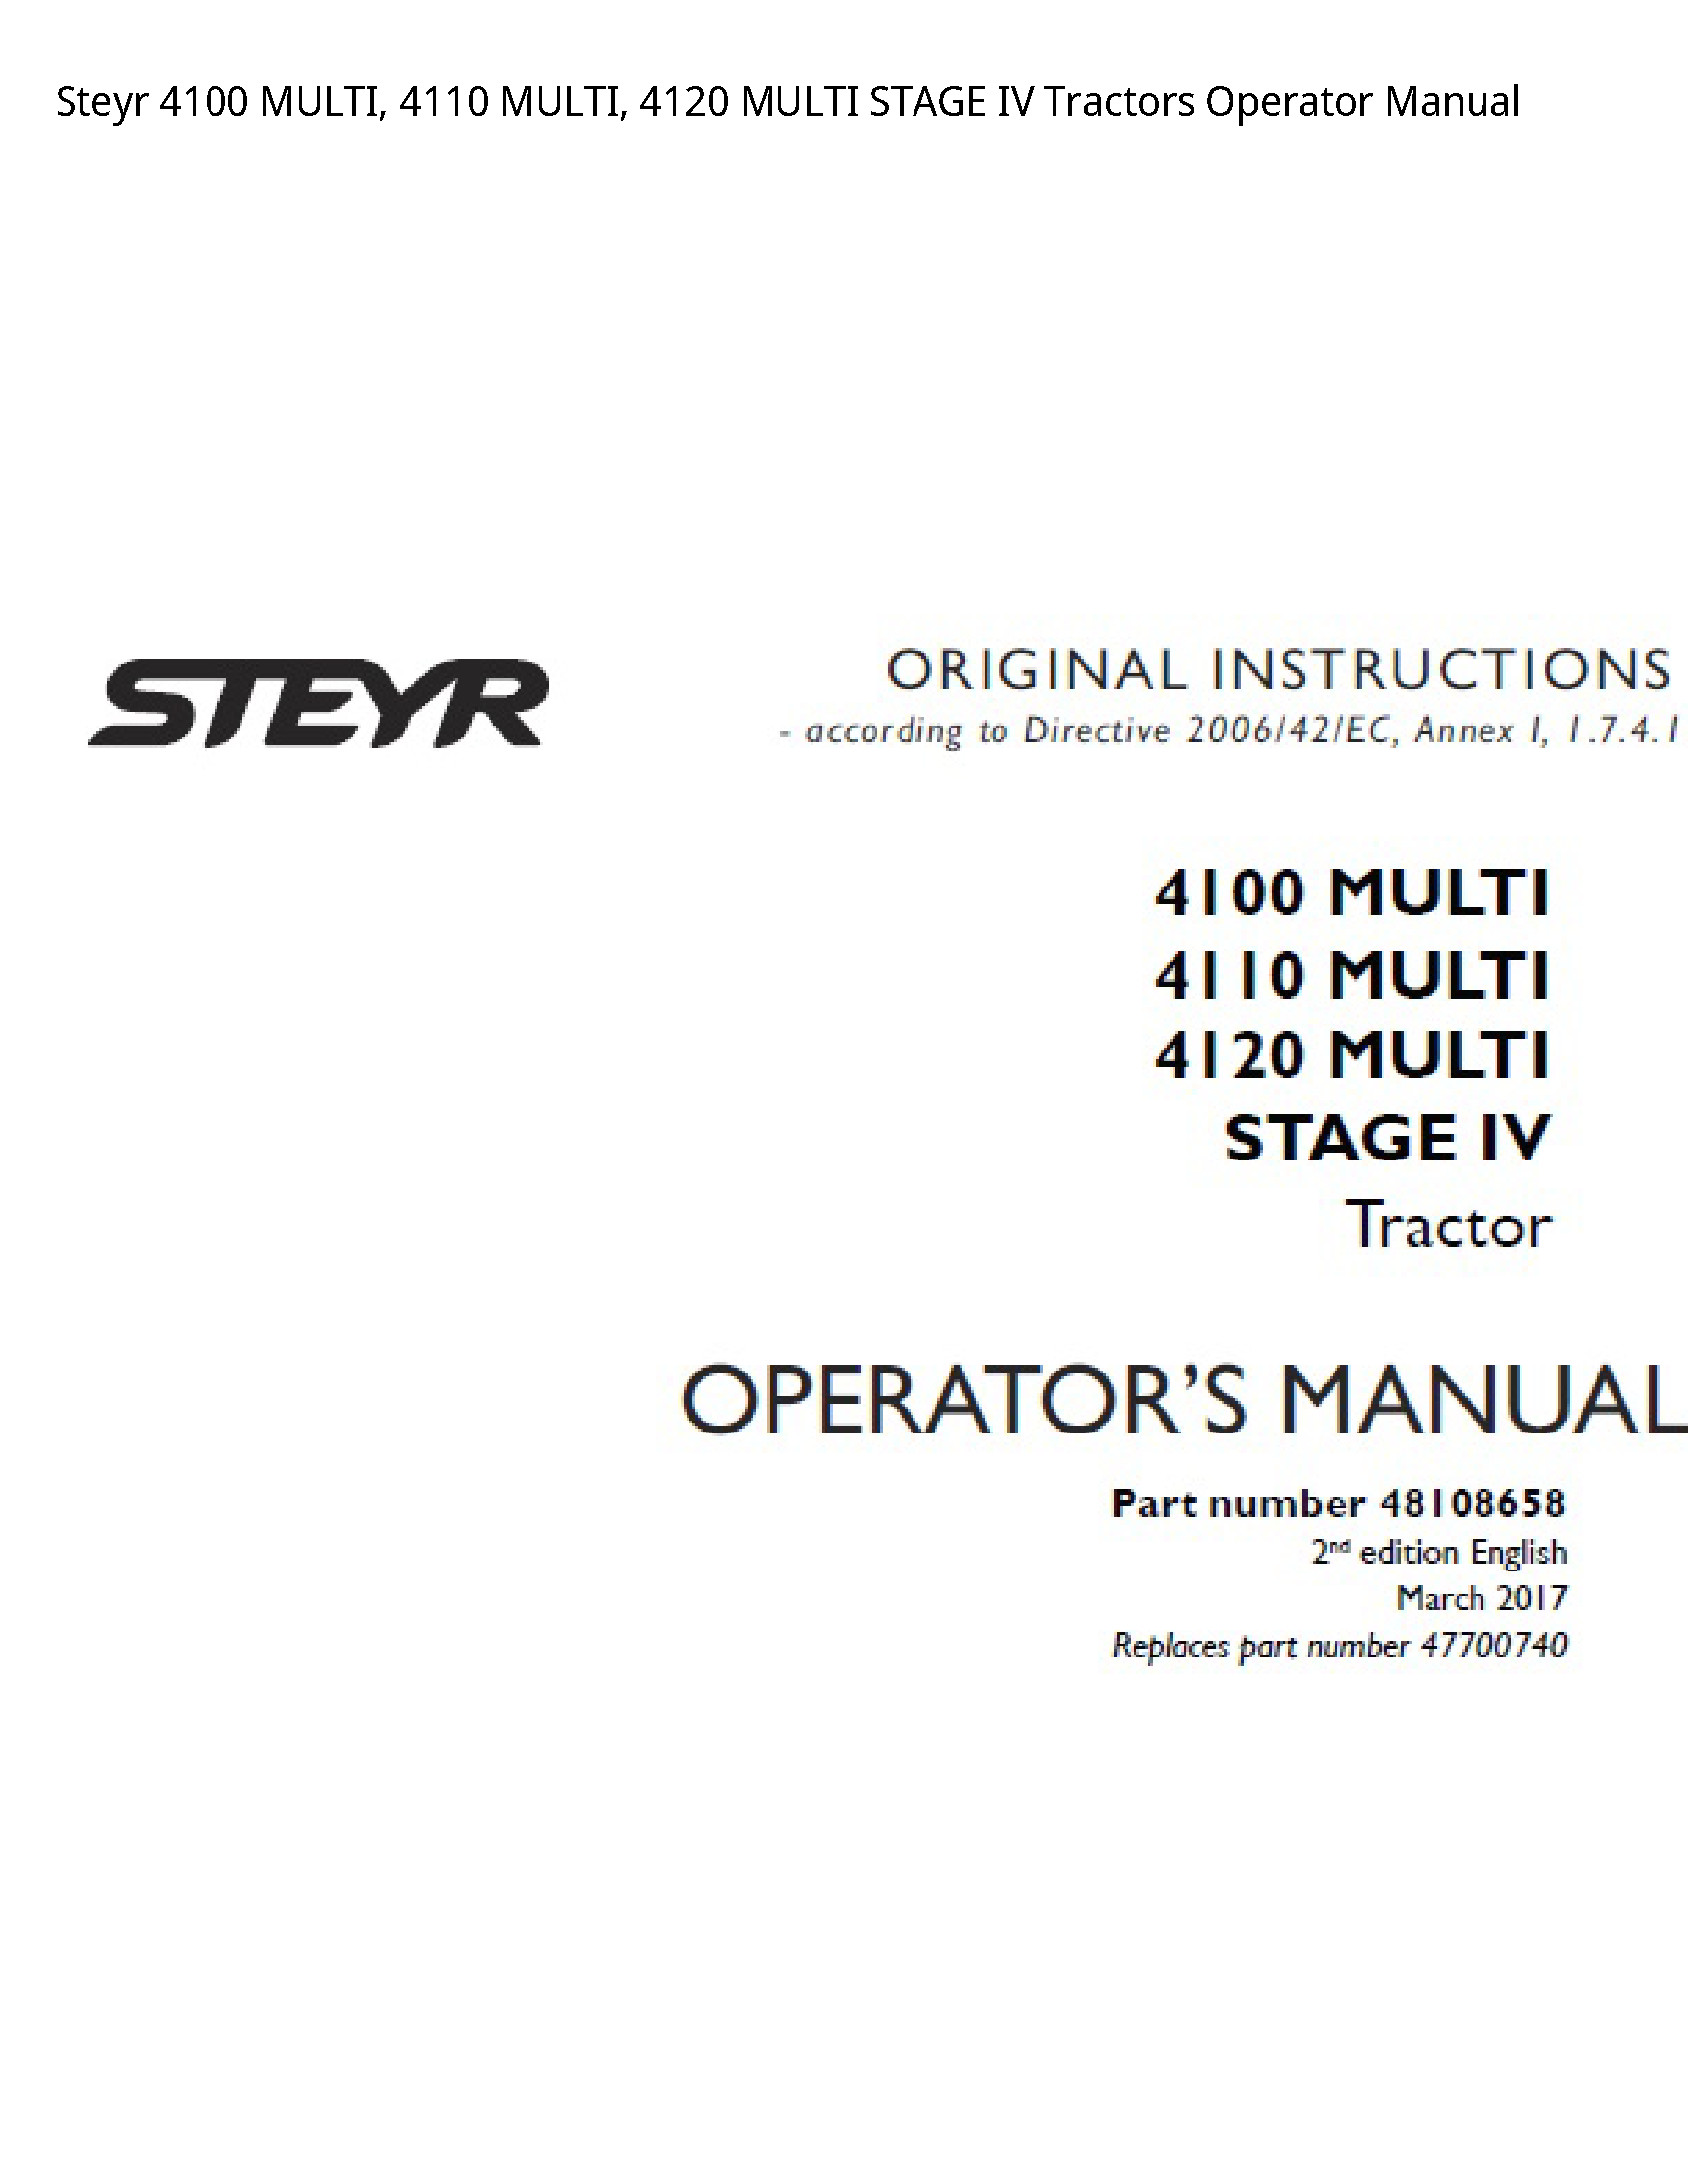 Steyr 4100 MULTI manual